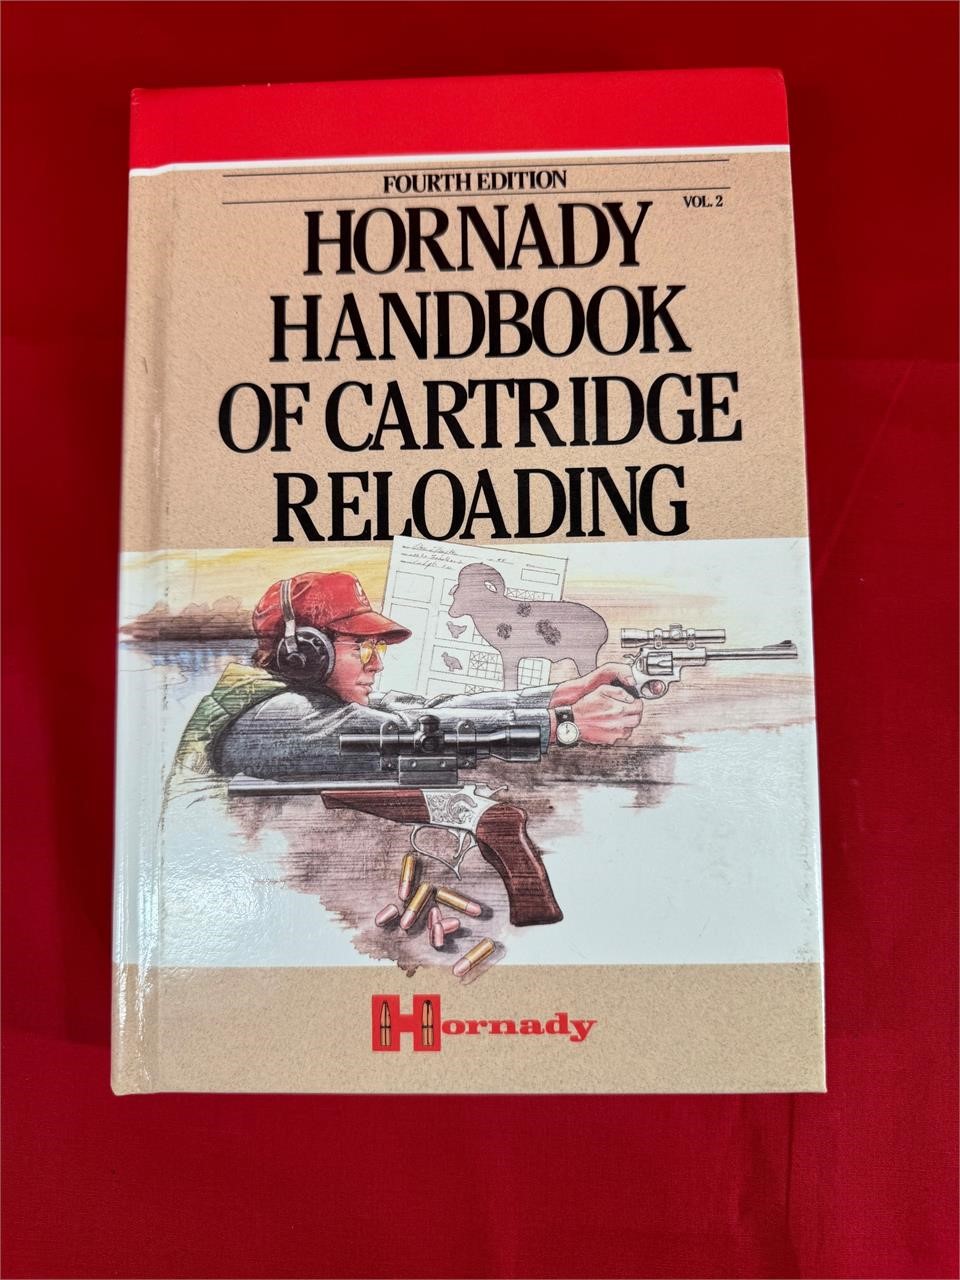 Hornady Handbook of Cartridge Reloading Vol. 2